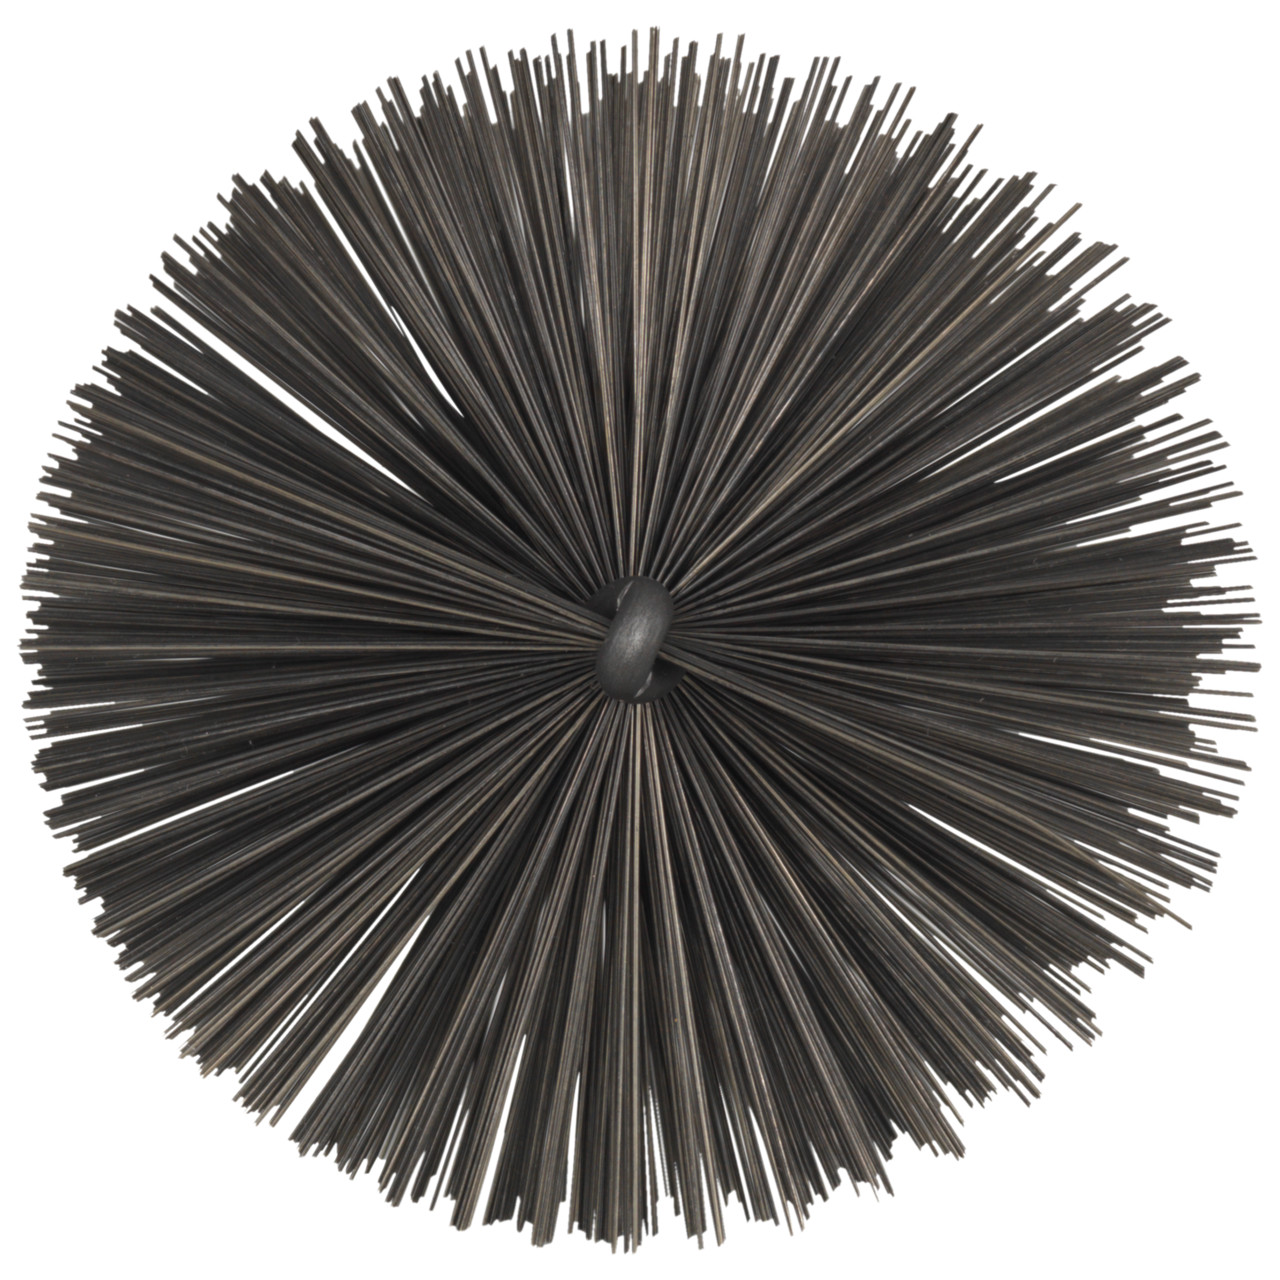 Tyrolit Cepillo para tubos con rosca exterior DxGE-I 20xW1/2-150 Para acero, forma: 18ROGDG - (cepillo para tubos), Art. 34203600